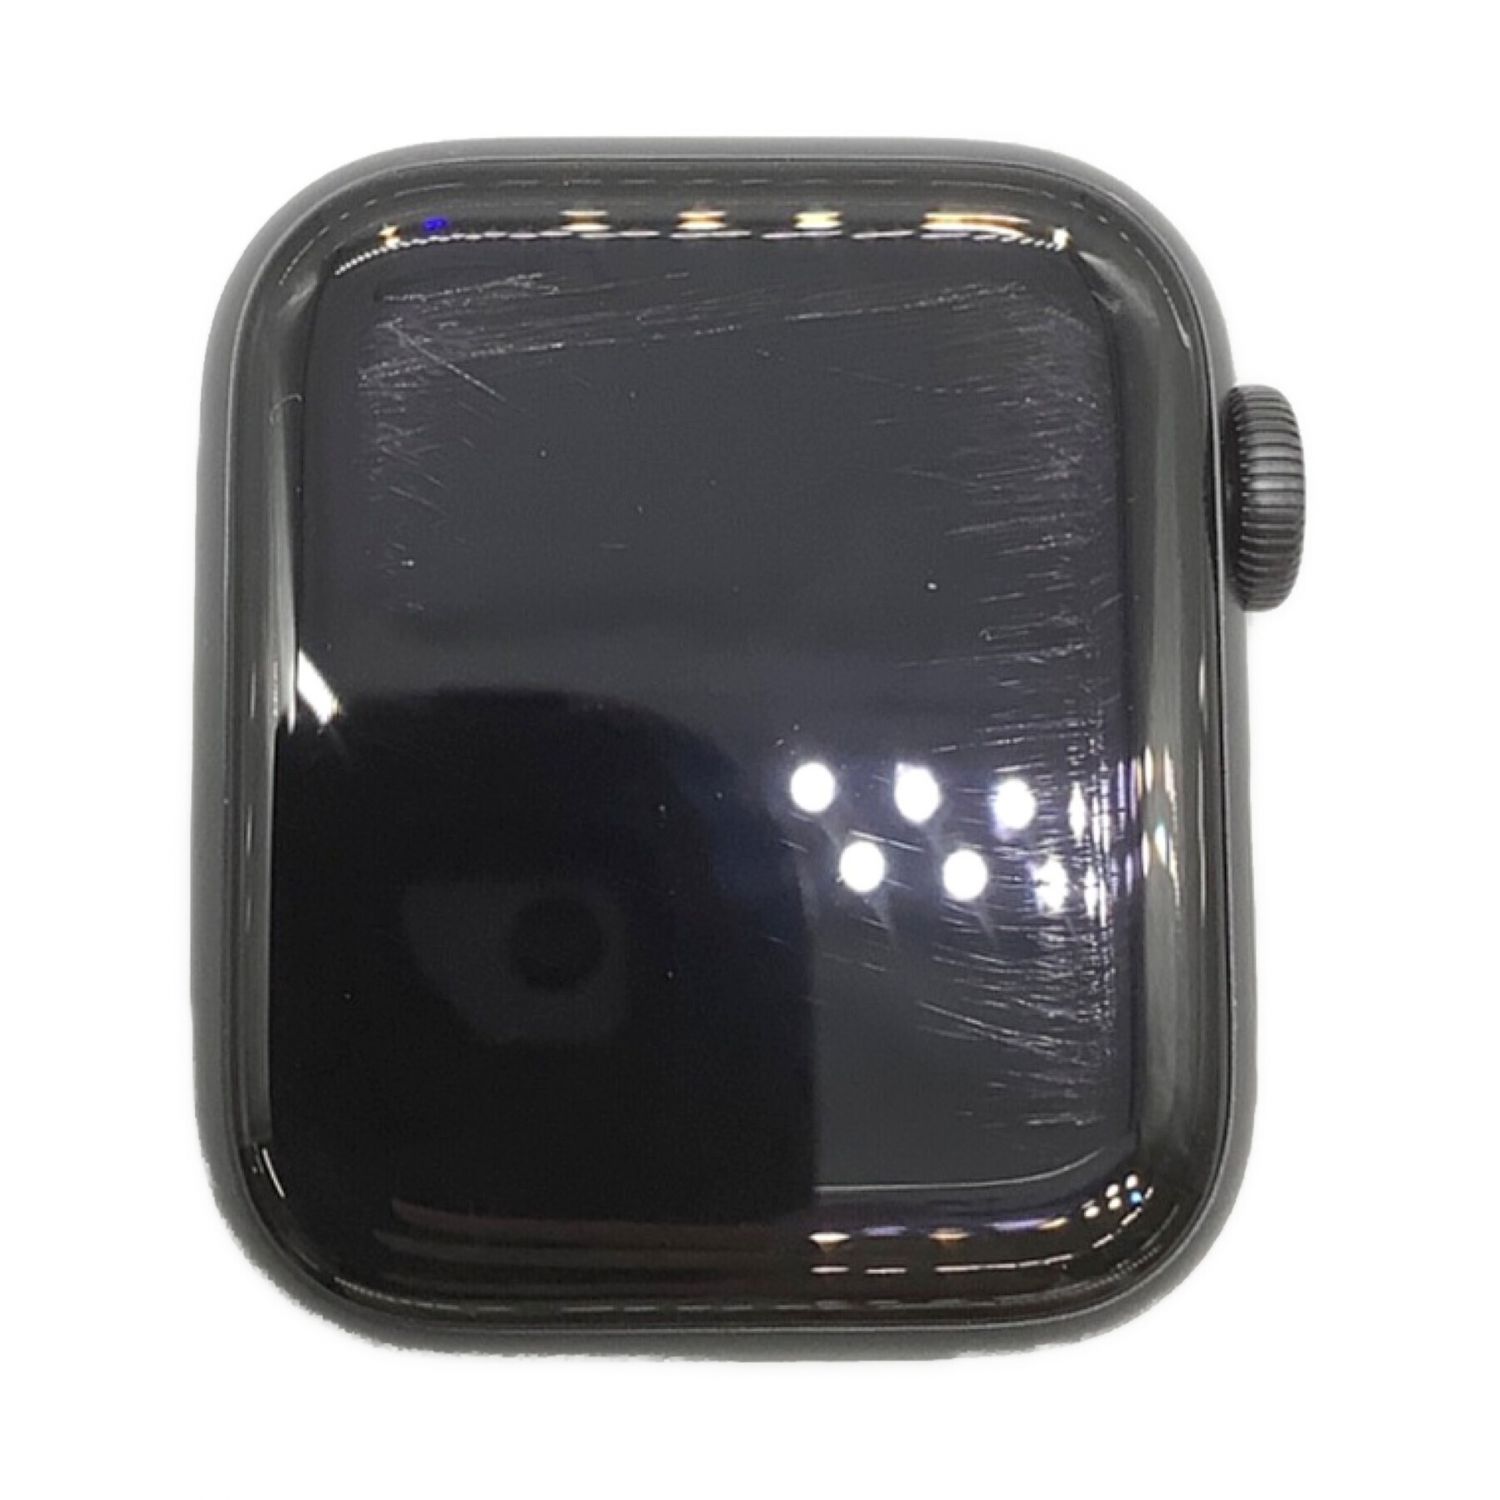 Apple (アップル) Apple Watch Series 6 充電器無し 画面キズ多数